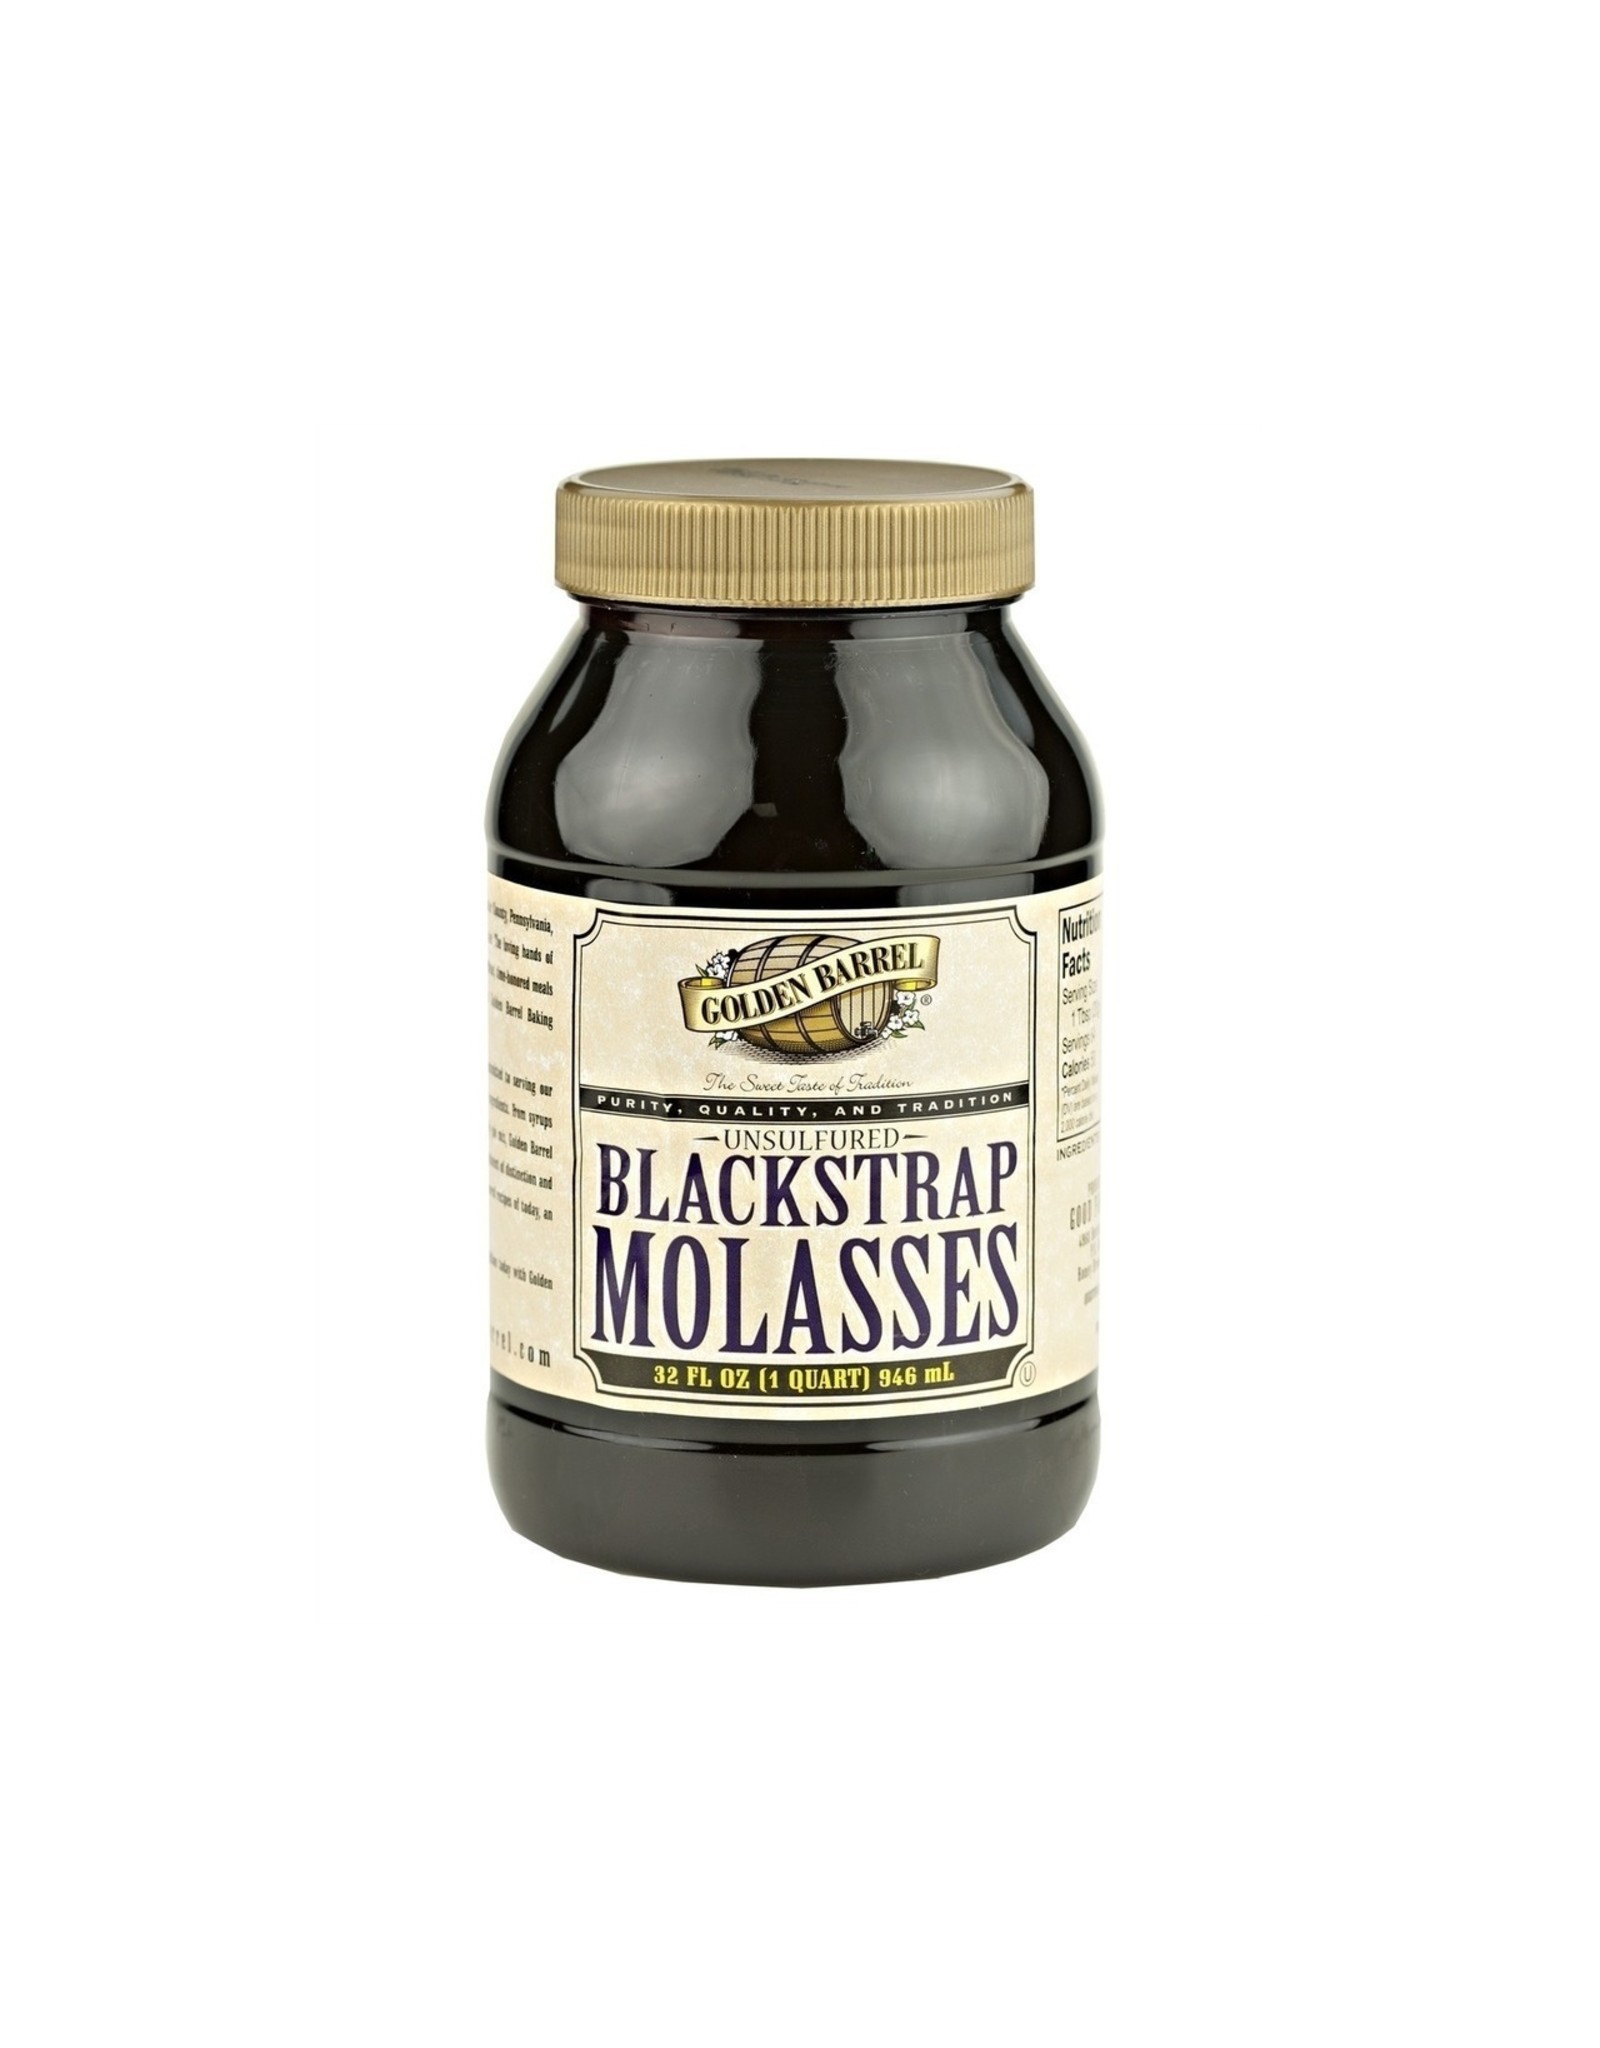 Golden Barrel Molasses Blackstrap Sulfur Free 32 oz